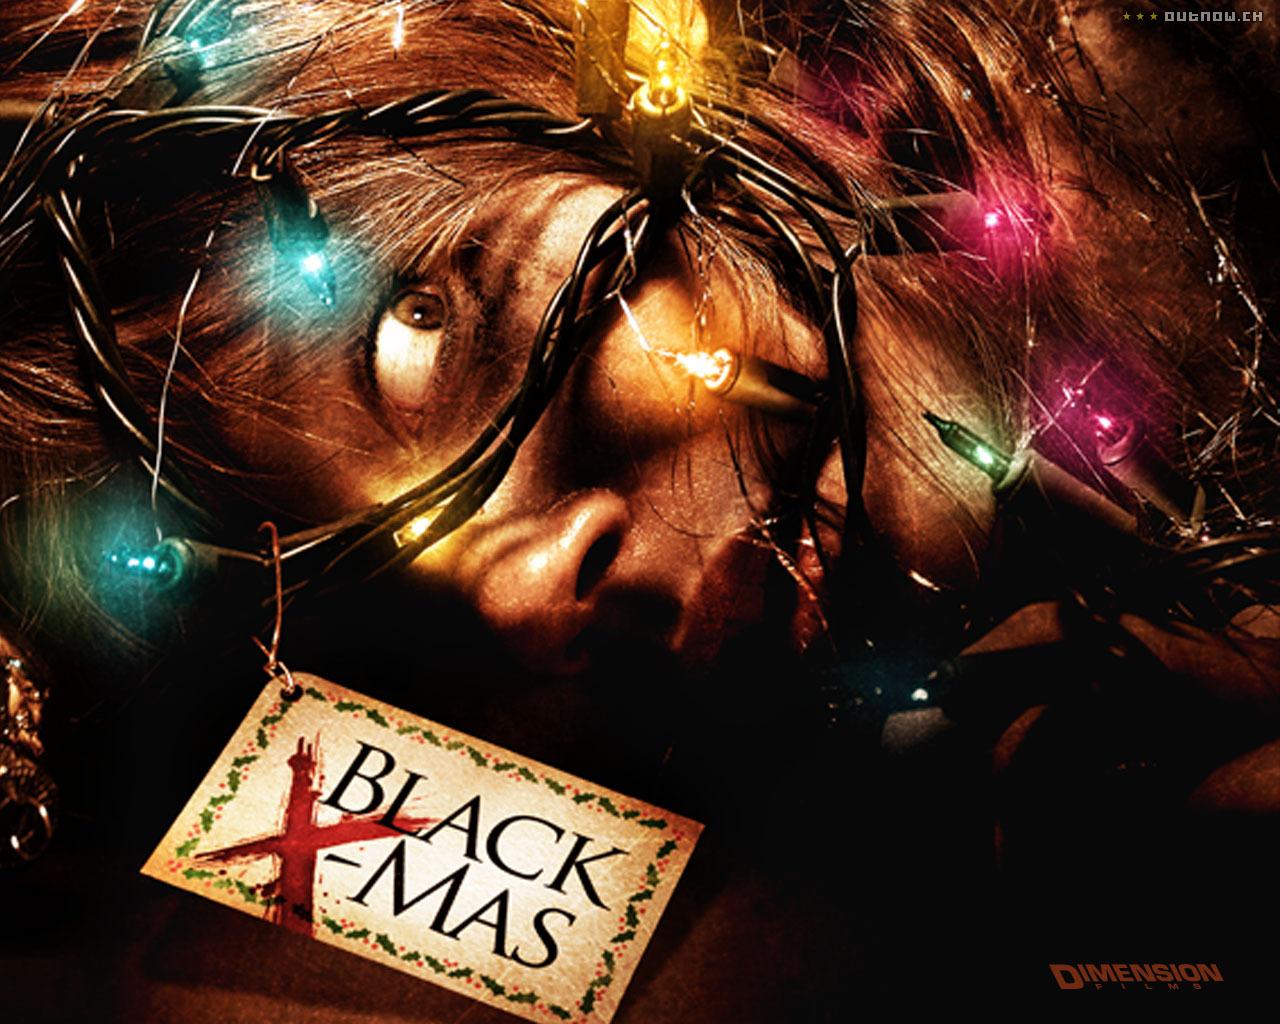 Black Christmas (2006) Movie (remakes) Wallpaper